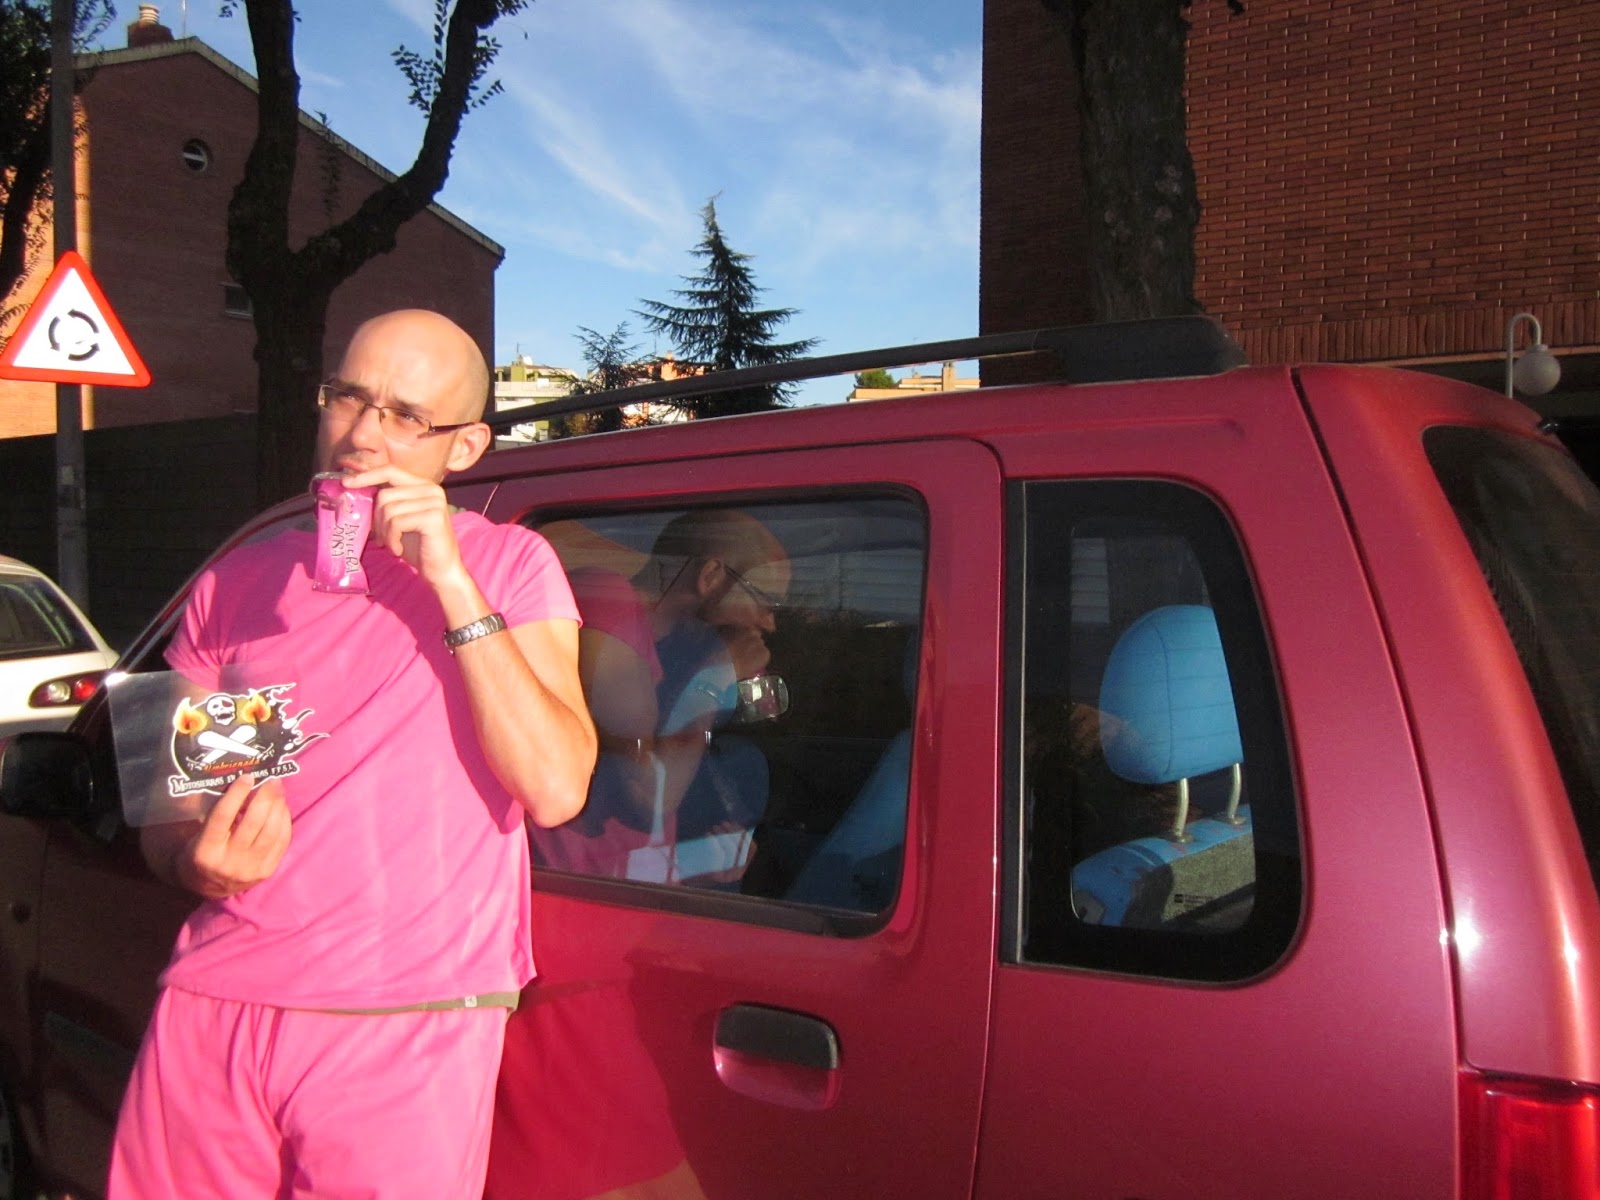 95. Vestido de color rosa, mientras te comes un bollito Pantera Rosa, junto a un coche rosa.